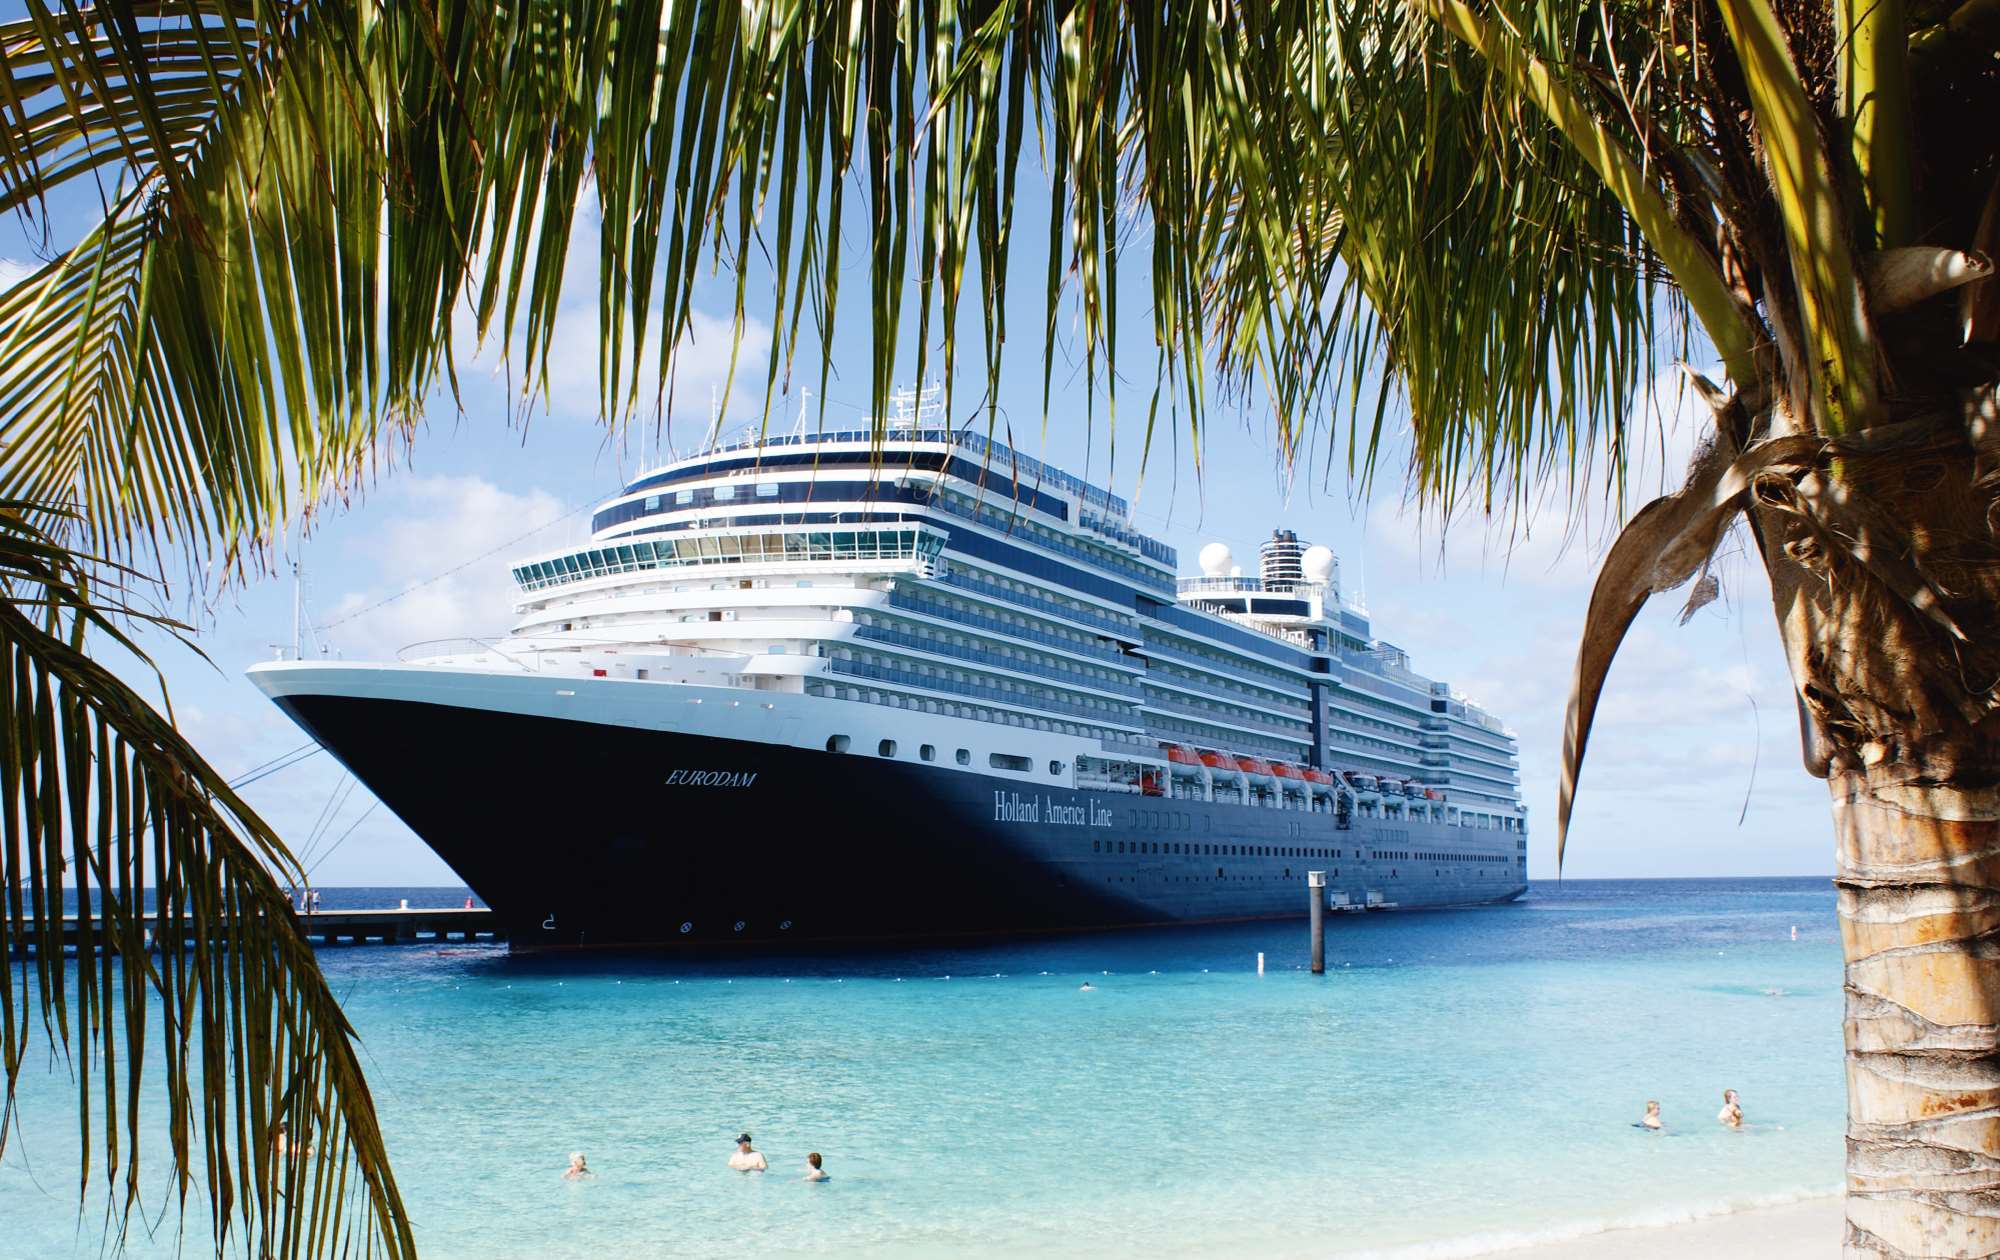 Cruiseschip Holland America Line in de Caribbean